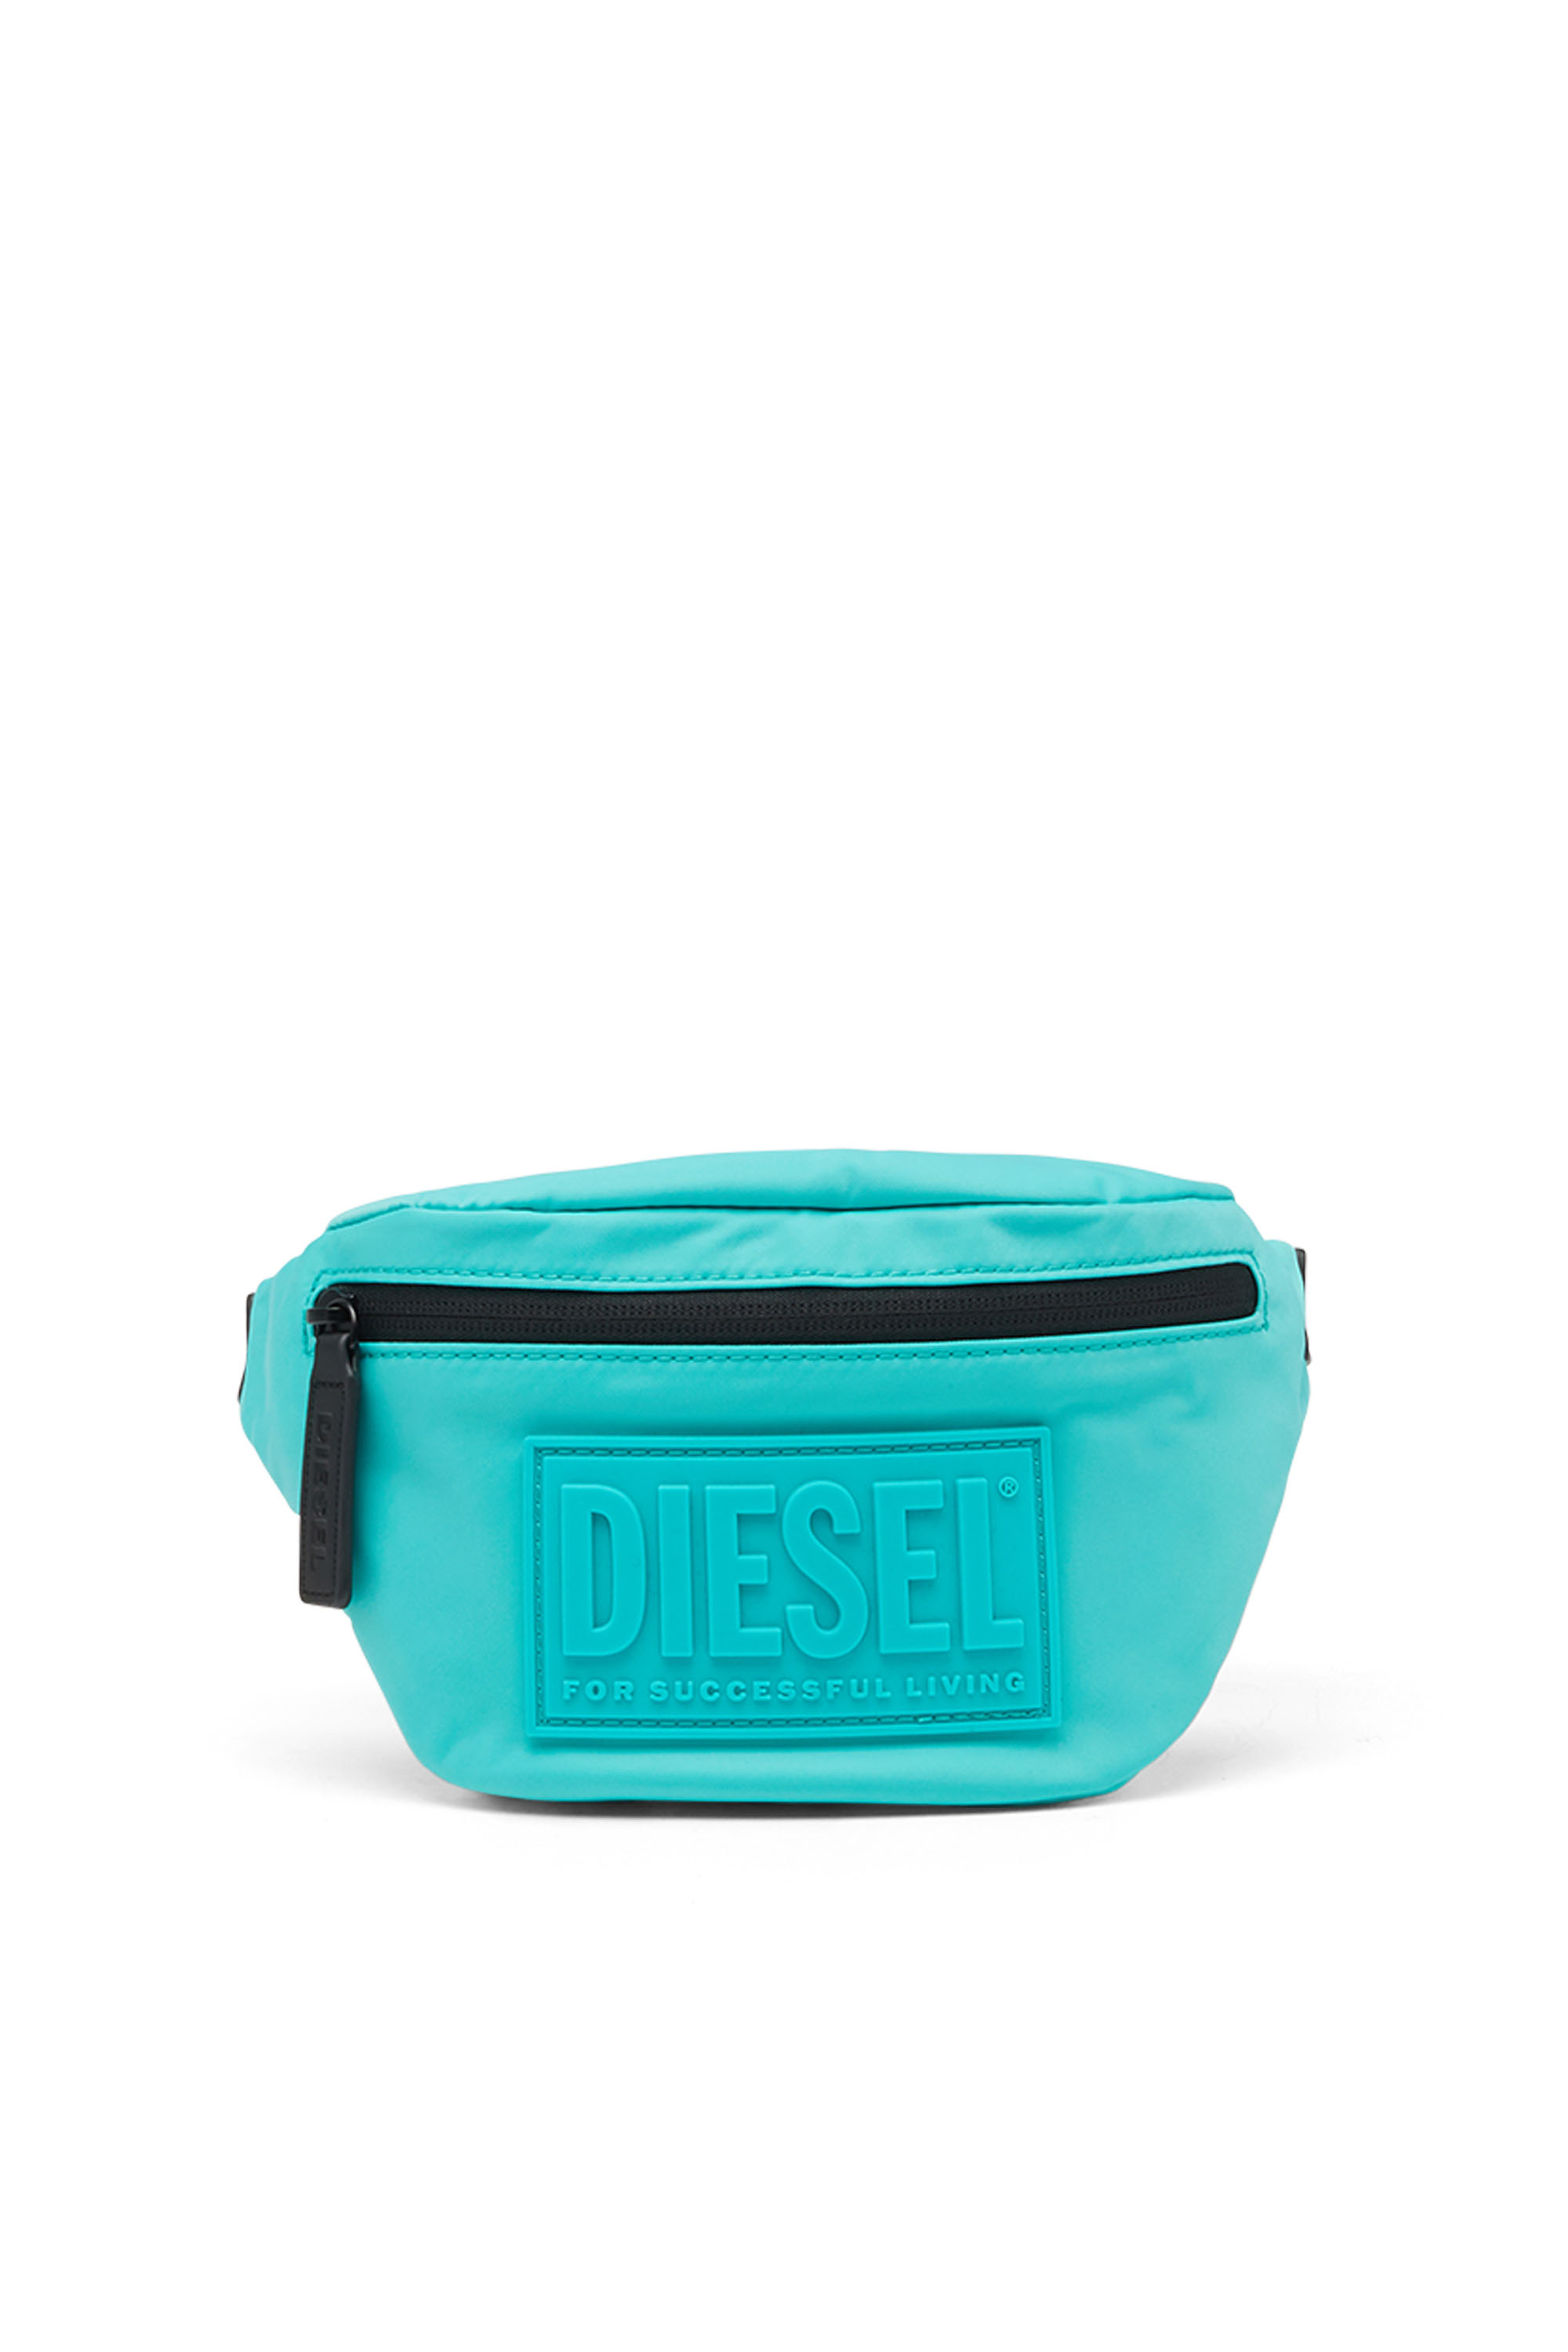 Diesel - BELTB55, Azur - Image 1